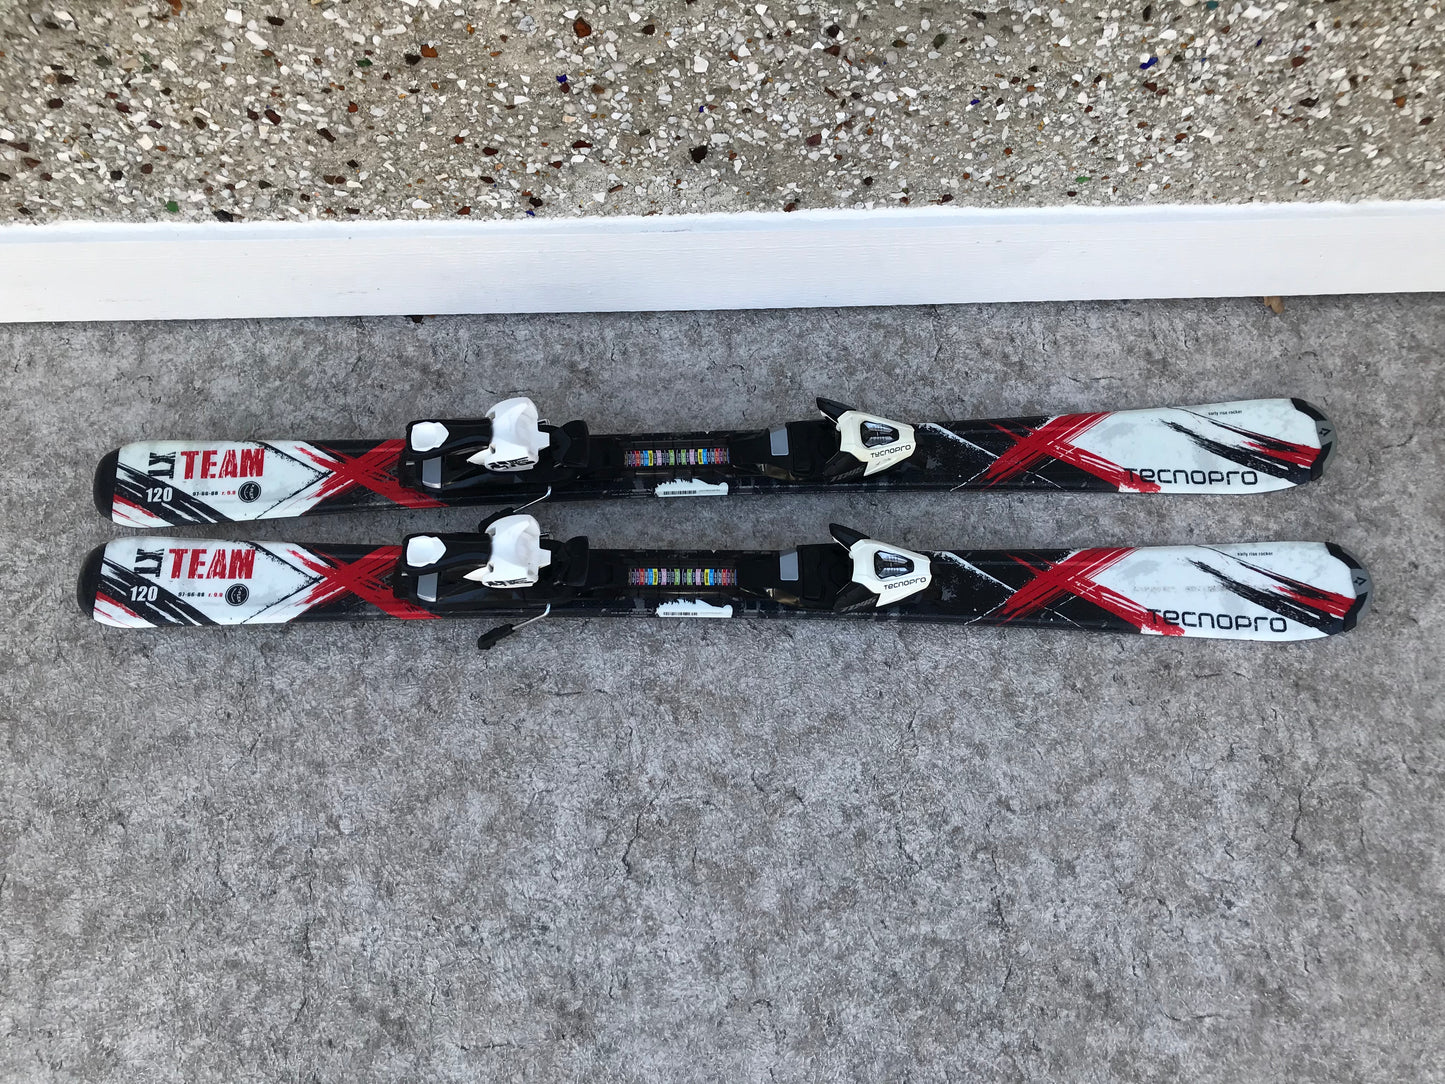 Ski 120 Tecno Pro X Team Red Black White Parabolic With Bindings